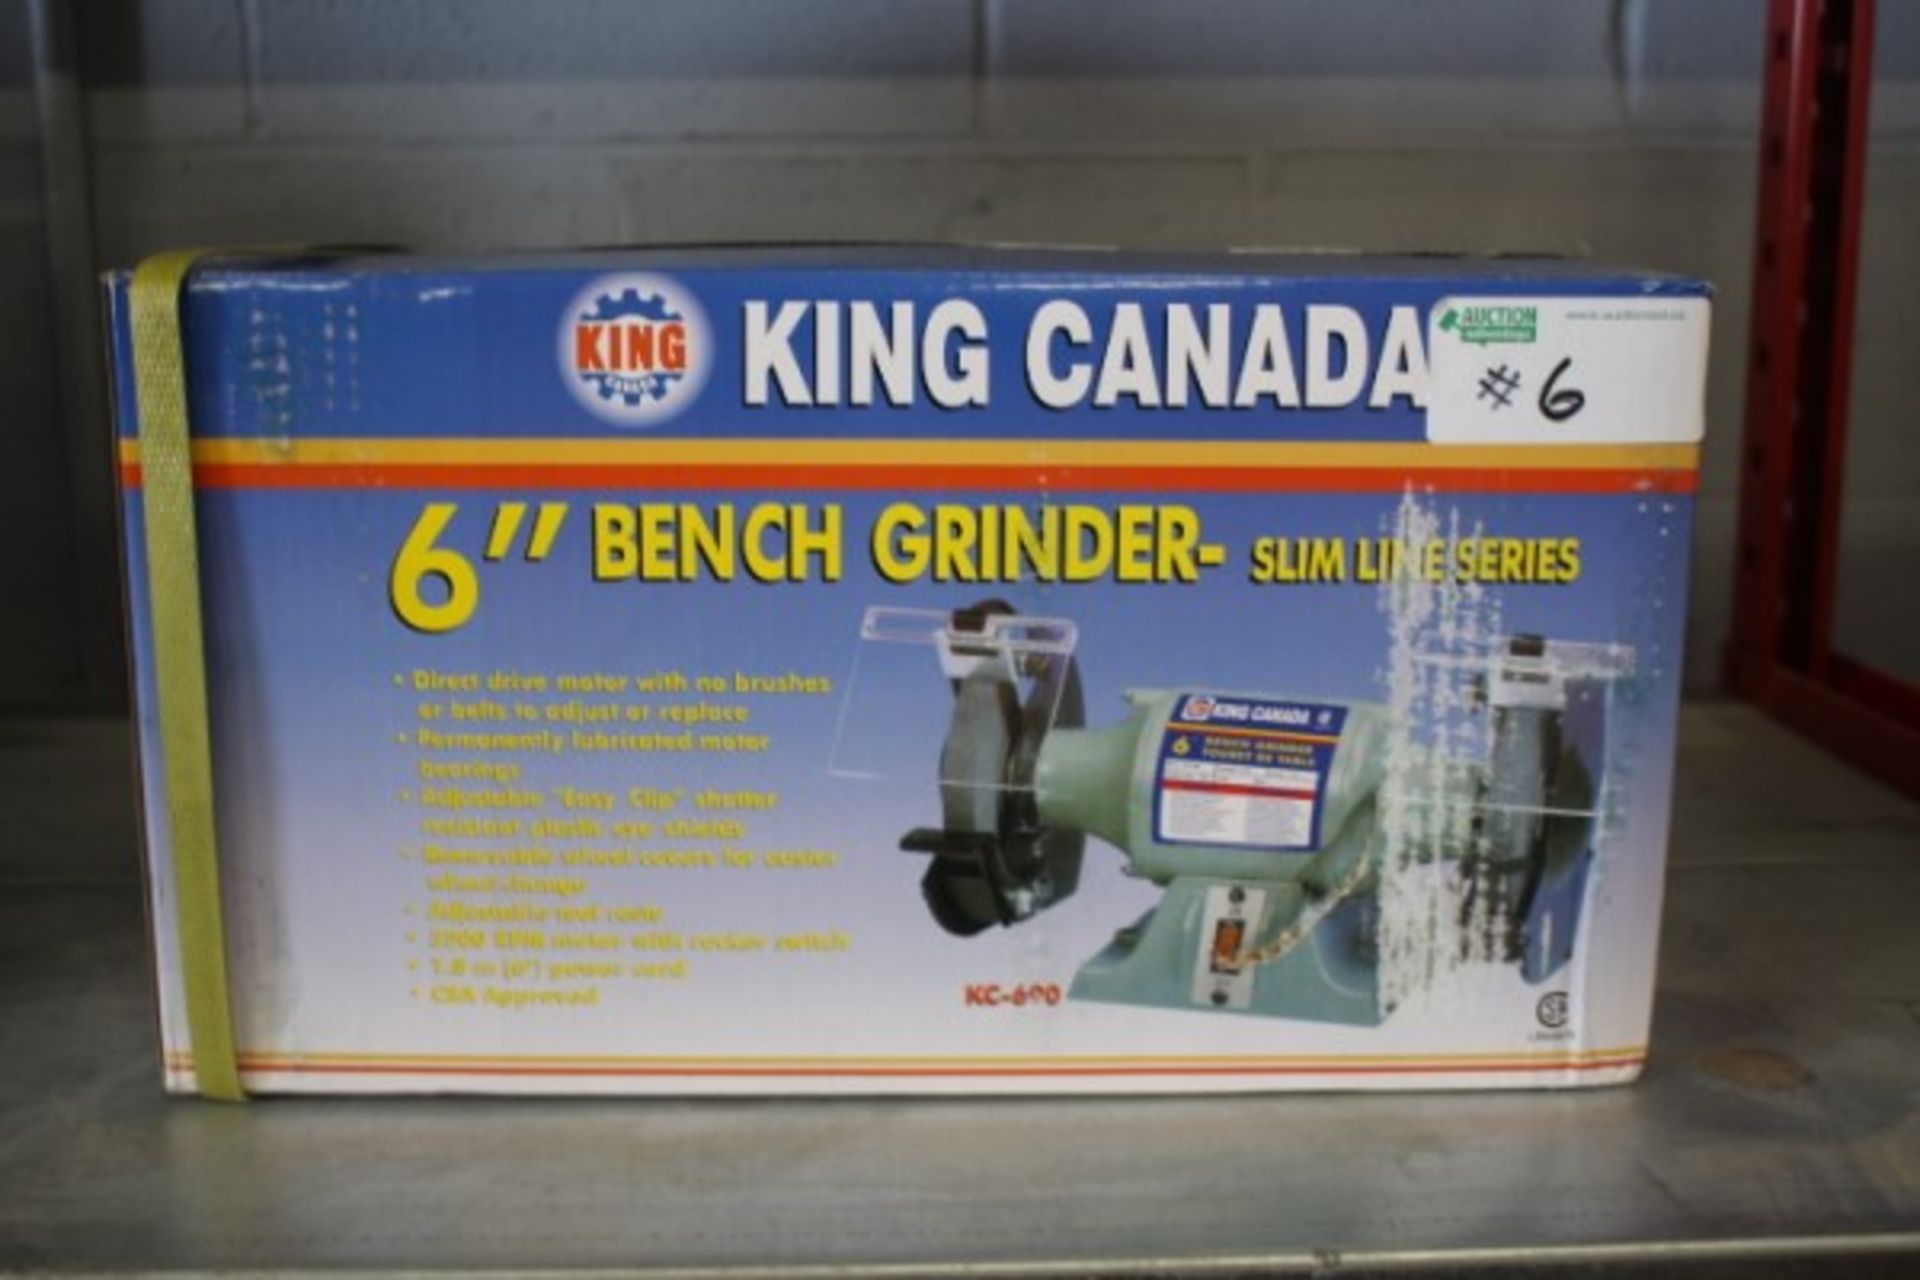 King Canada 6" Bench Grinder